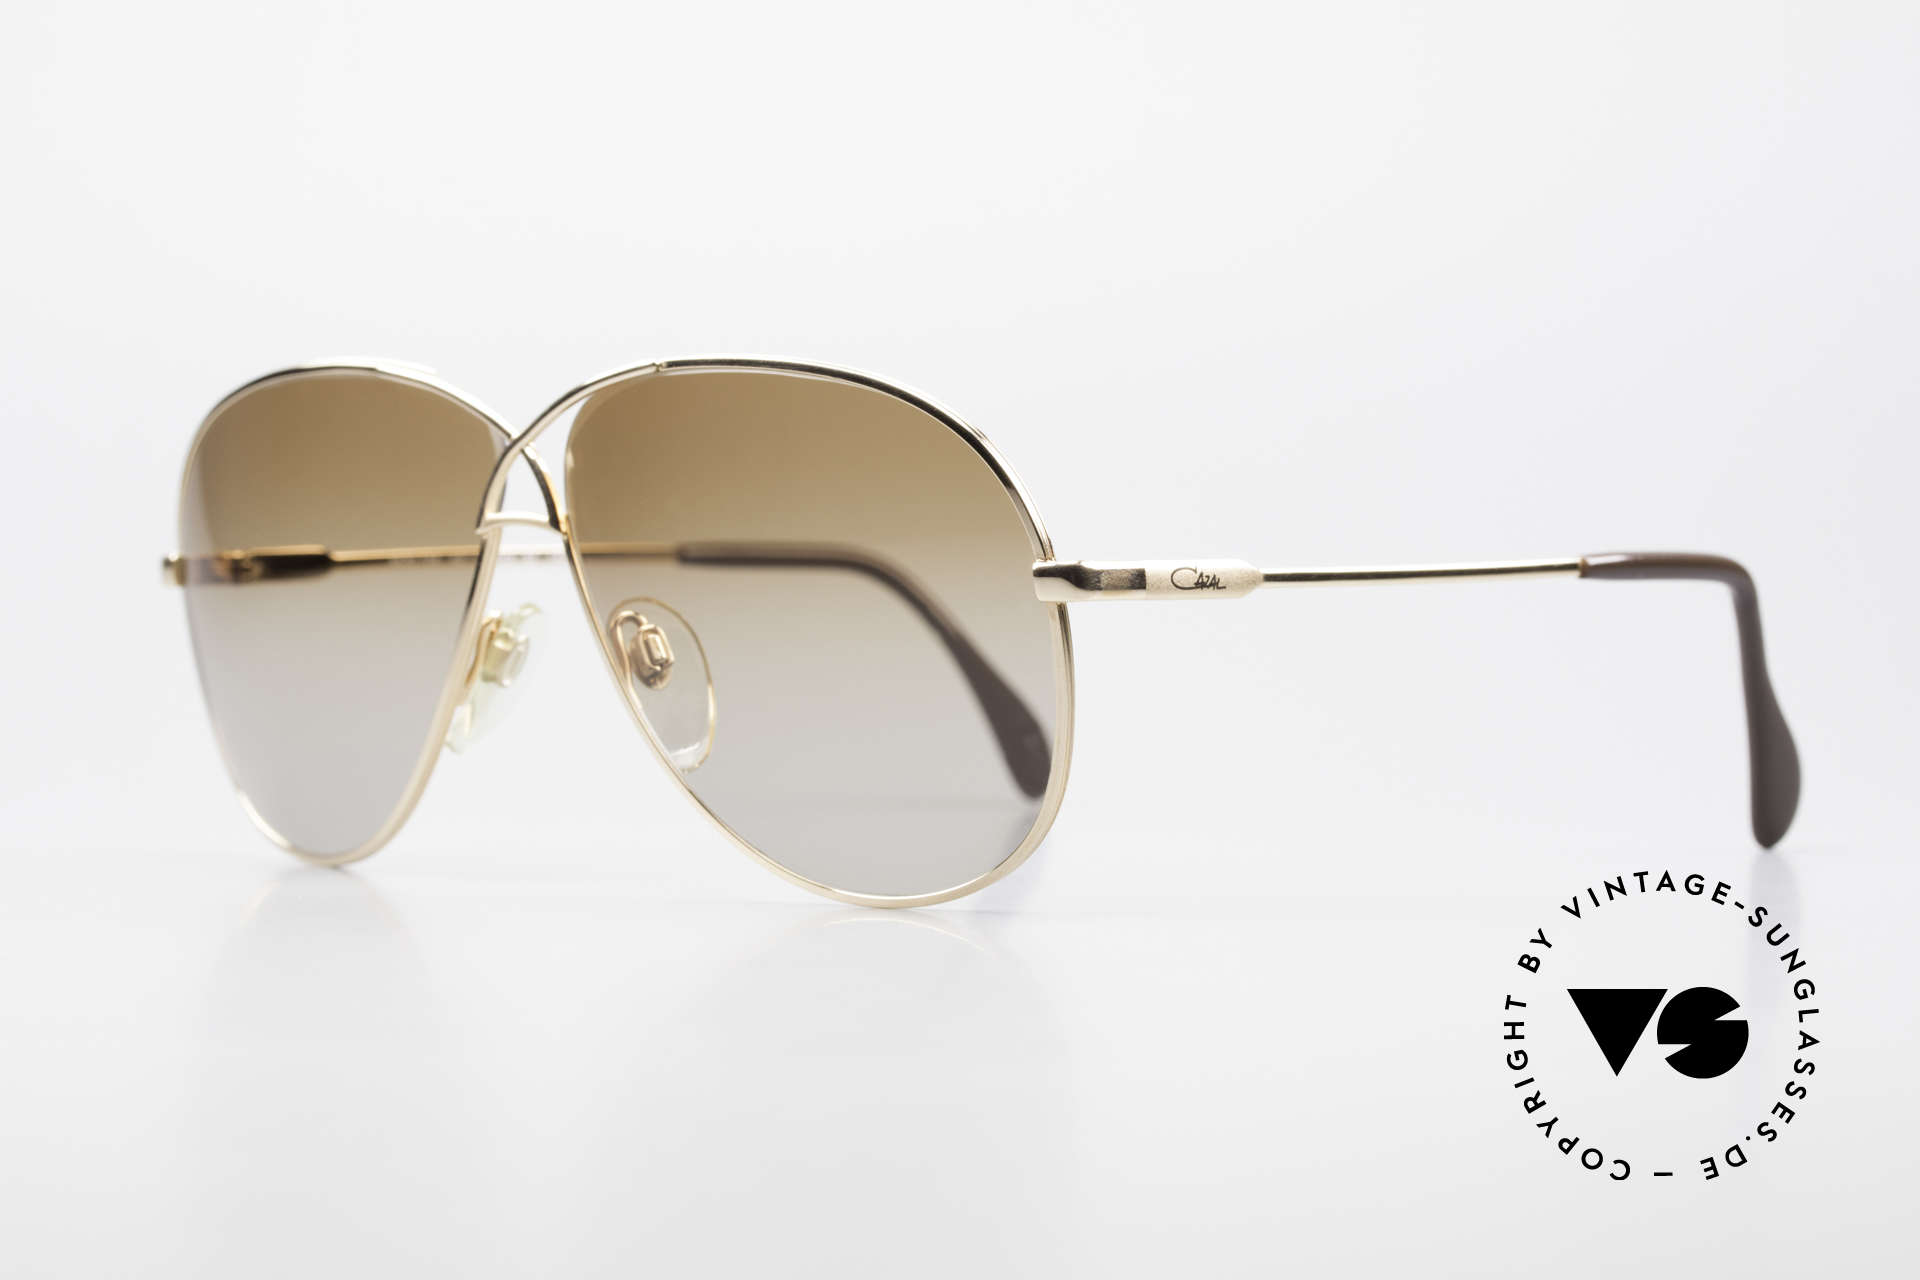 Cazal 728 Vintage Aviator Sunglasses, lightweight curved frame; in LARGE size 62-11, Made for Men